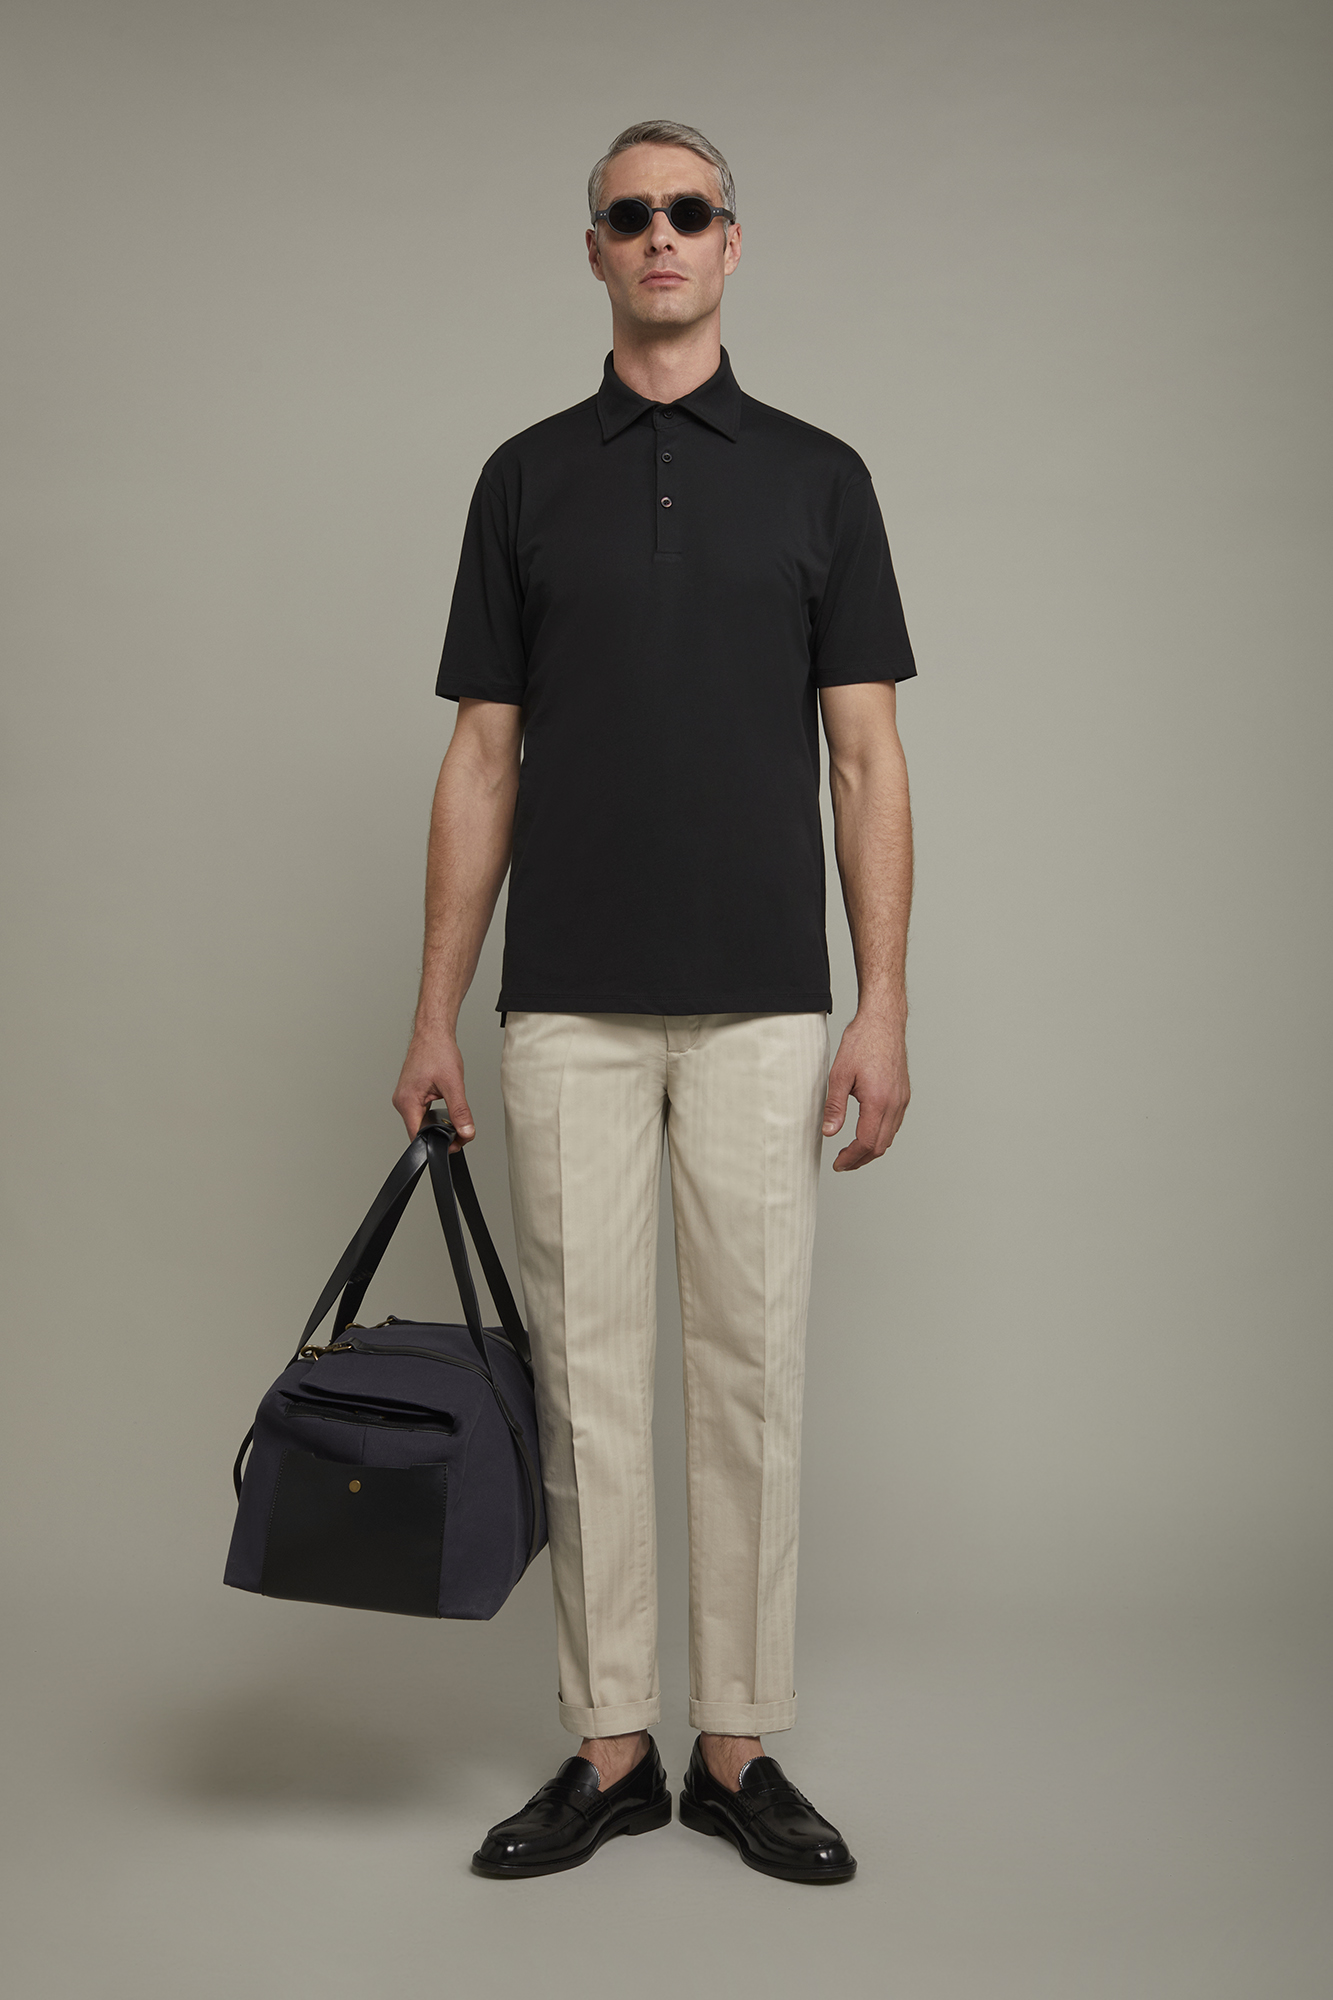 Men’s polo shirt short sleeves 100% supima cotton regular fit ...